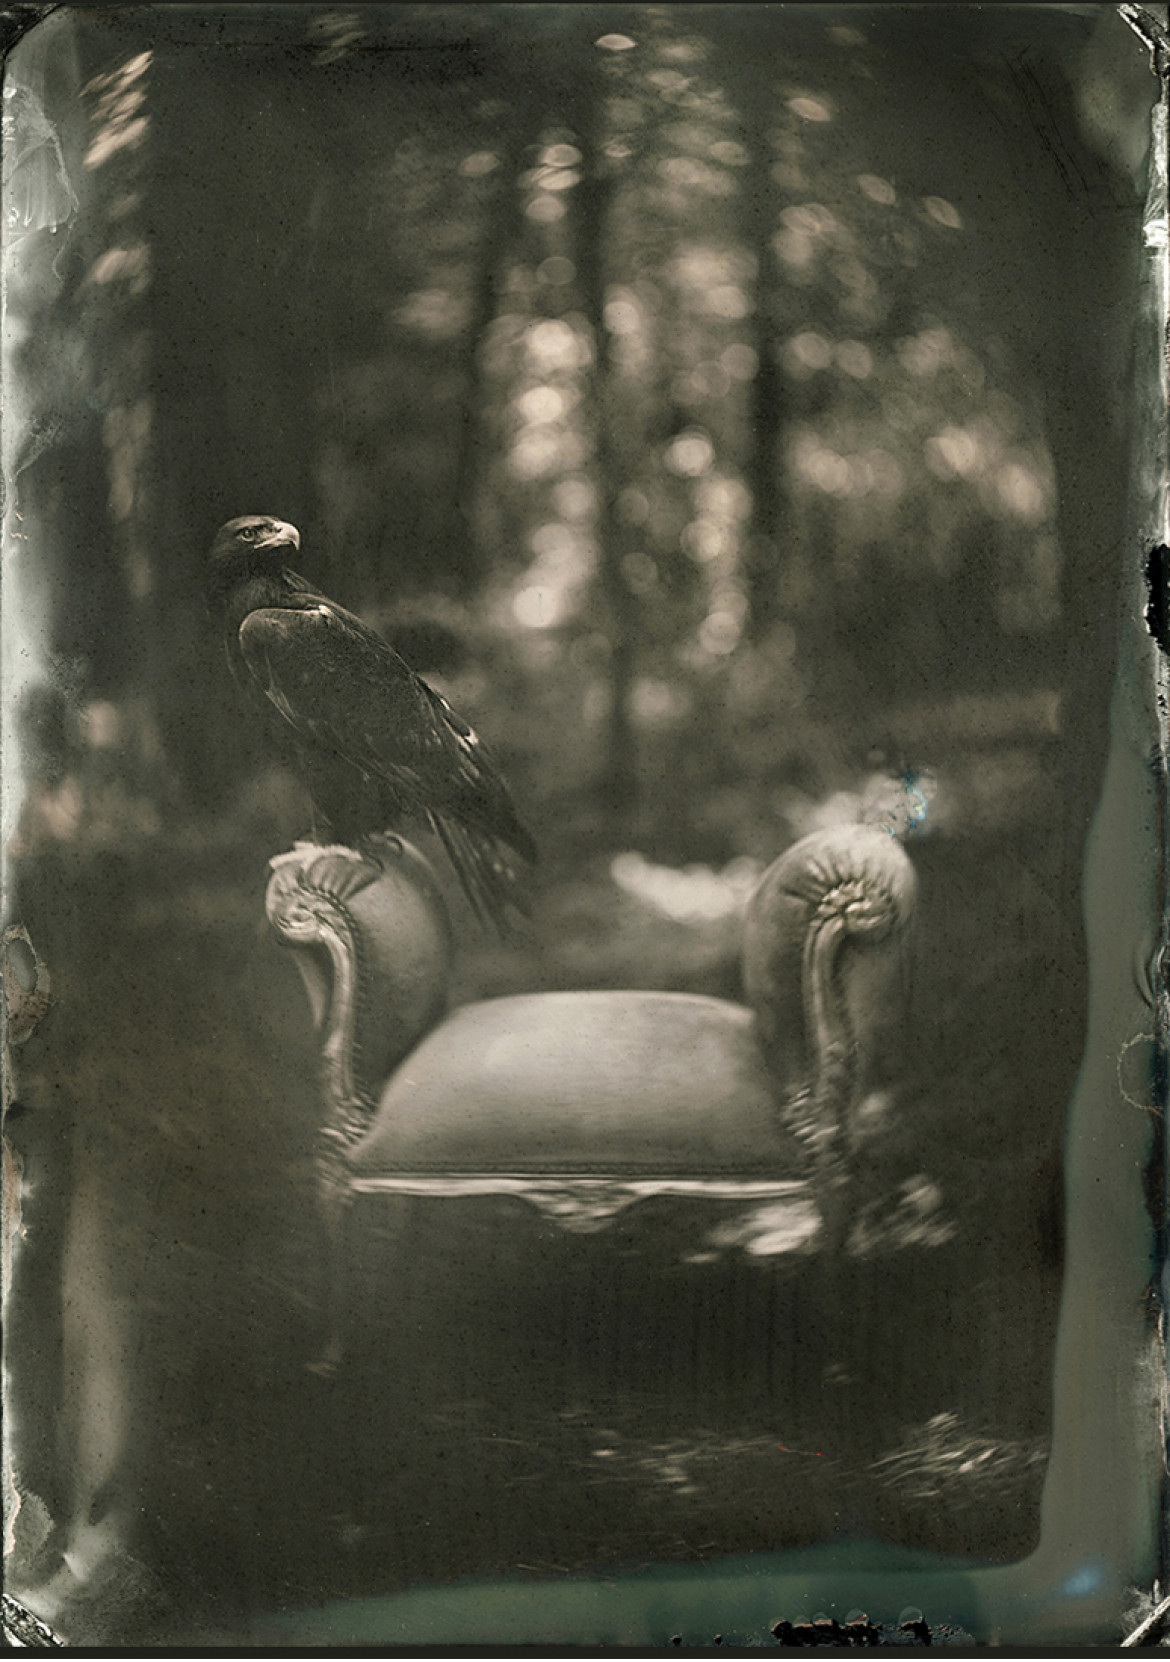 fot. John Huneycutt, "Portrait of a Rehabilitated Golden Eagle", 3. miejsce w kategorii Fine Art